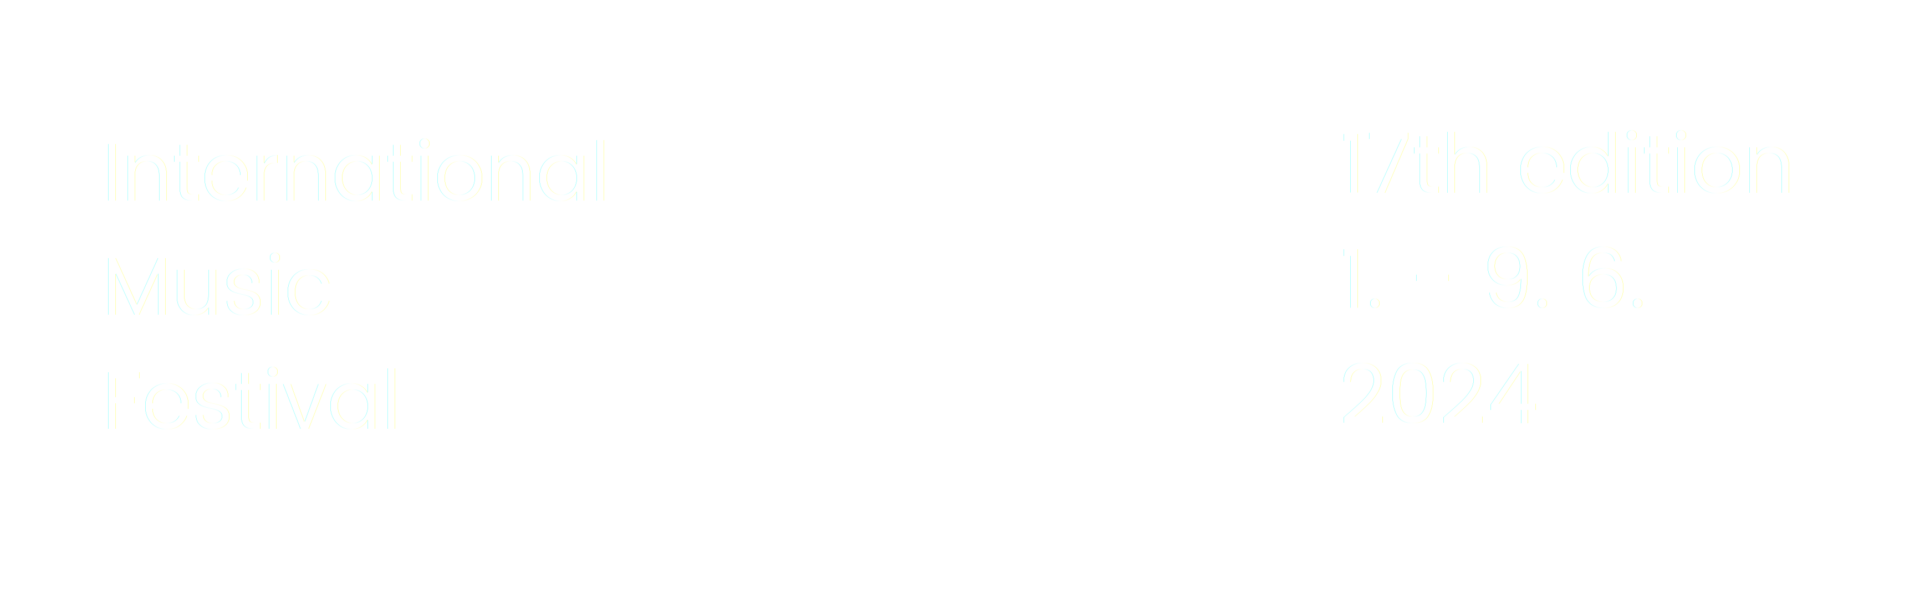 IMF Kutná Hora 2017